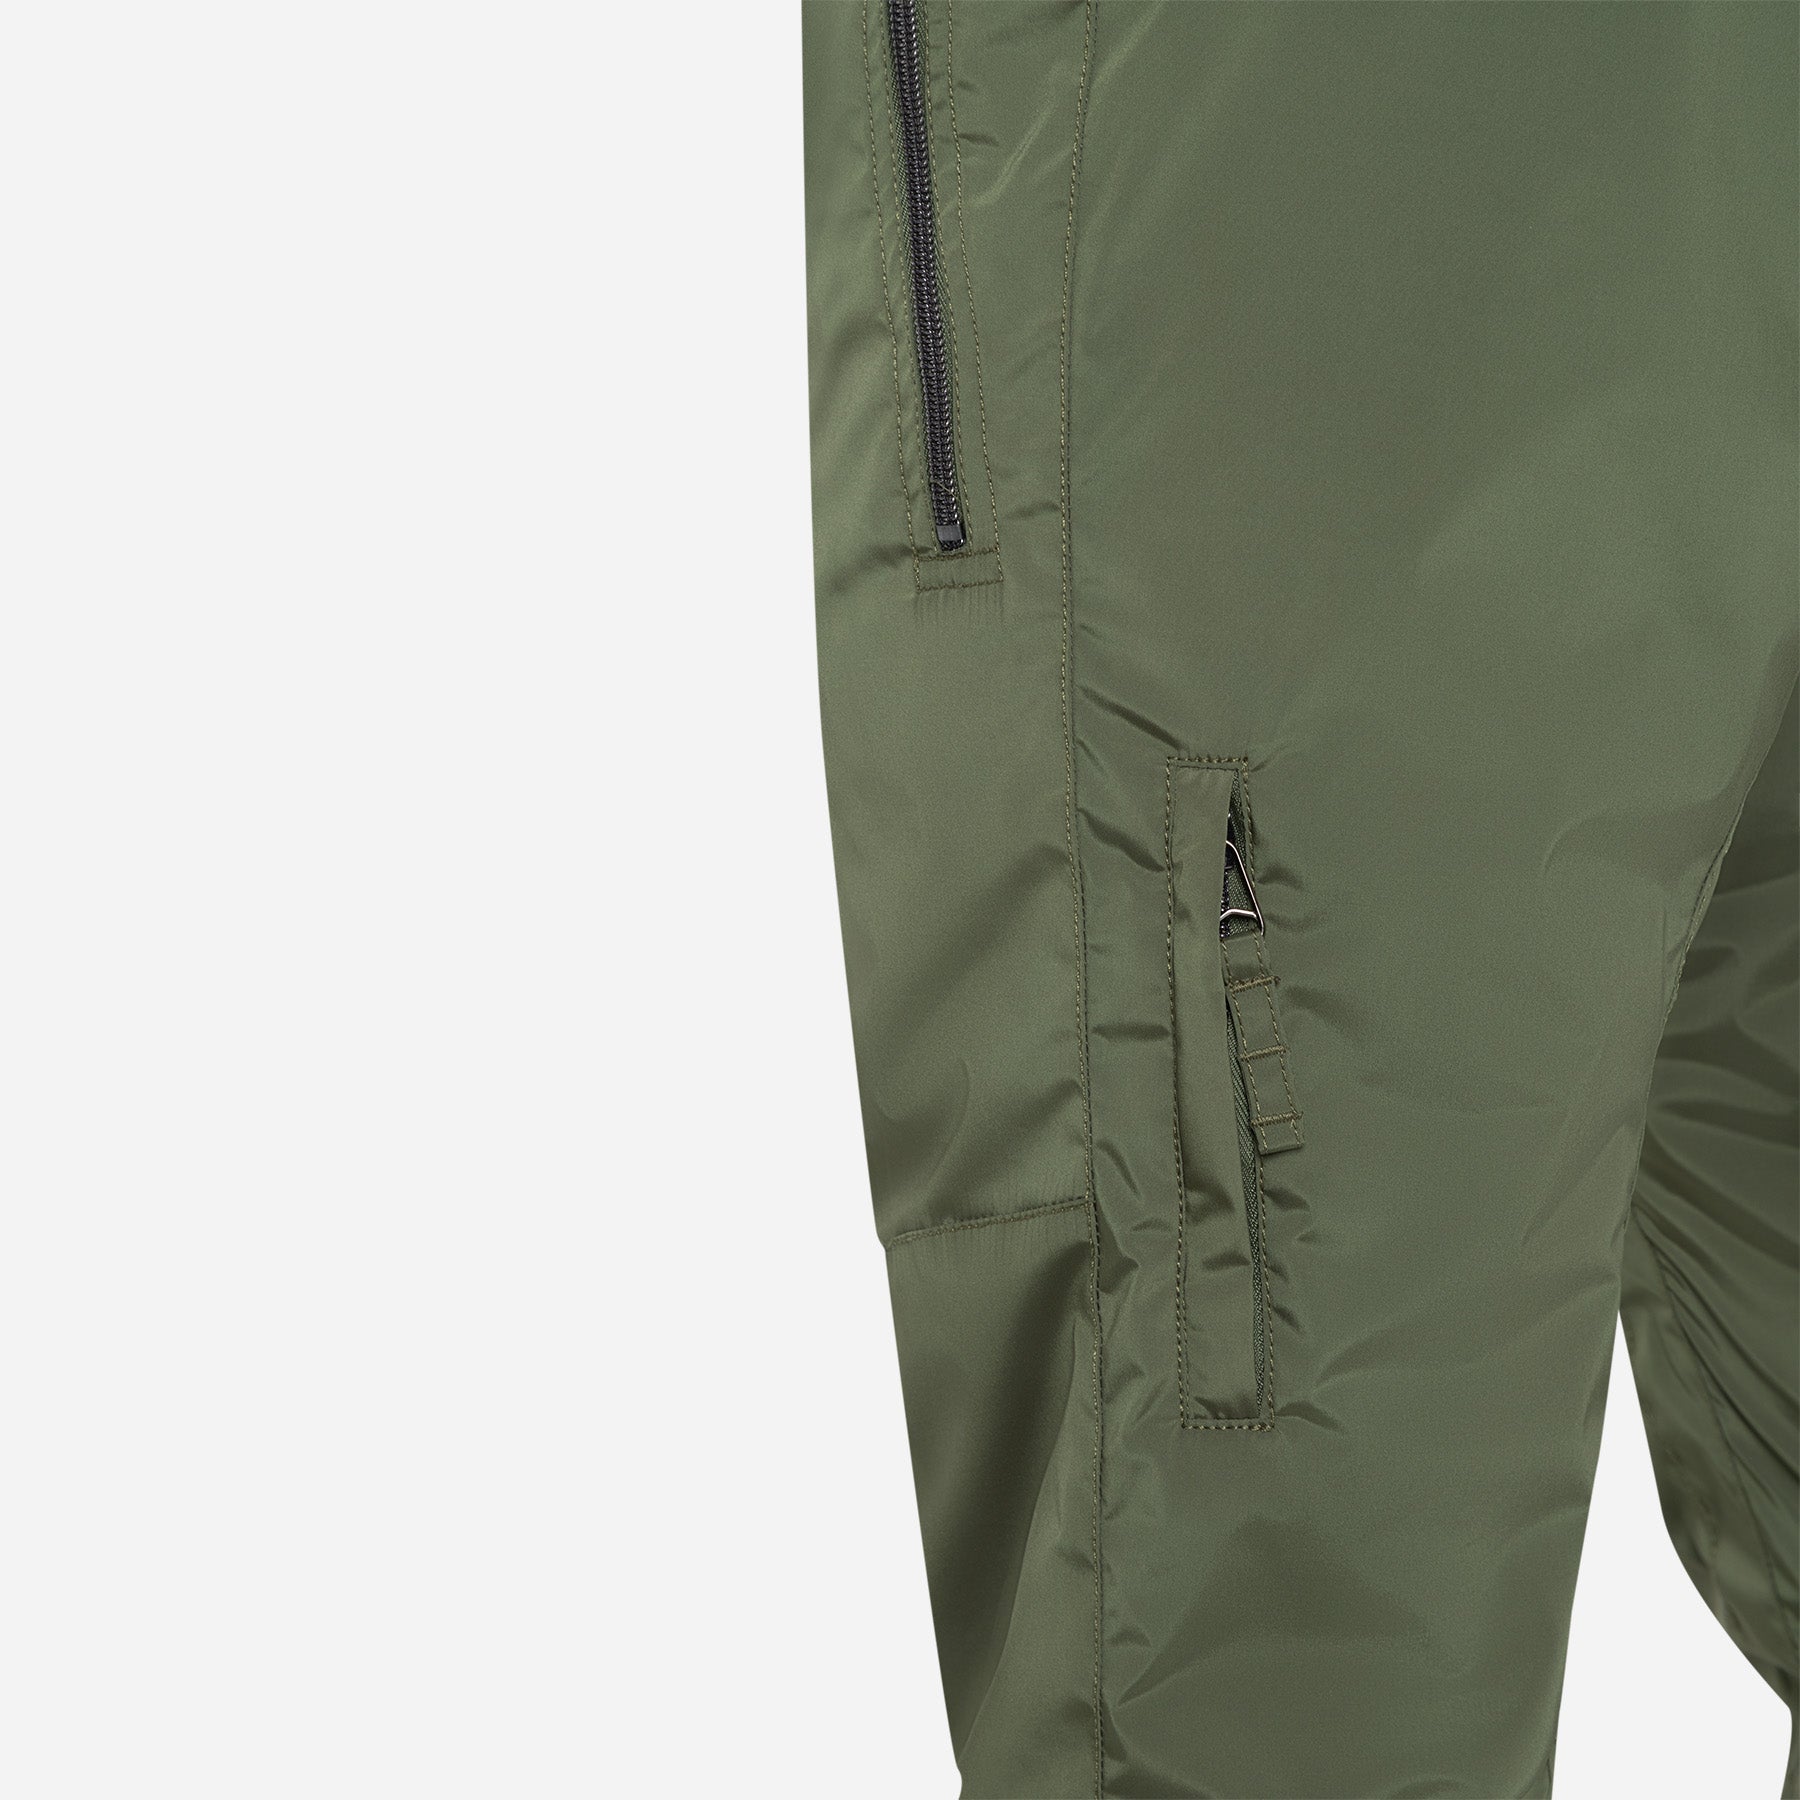 Oscar Ski Pants Army Green